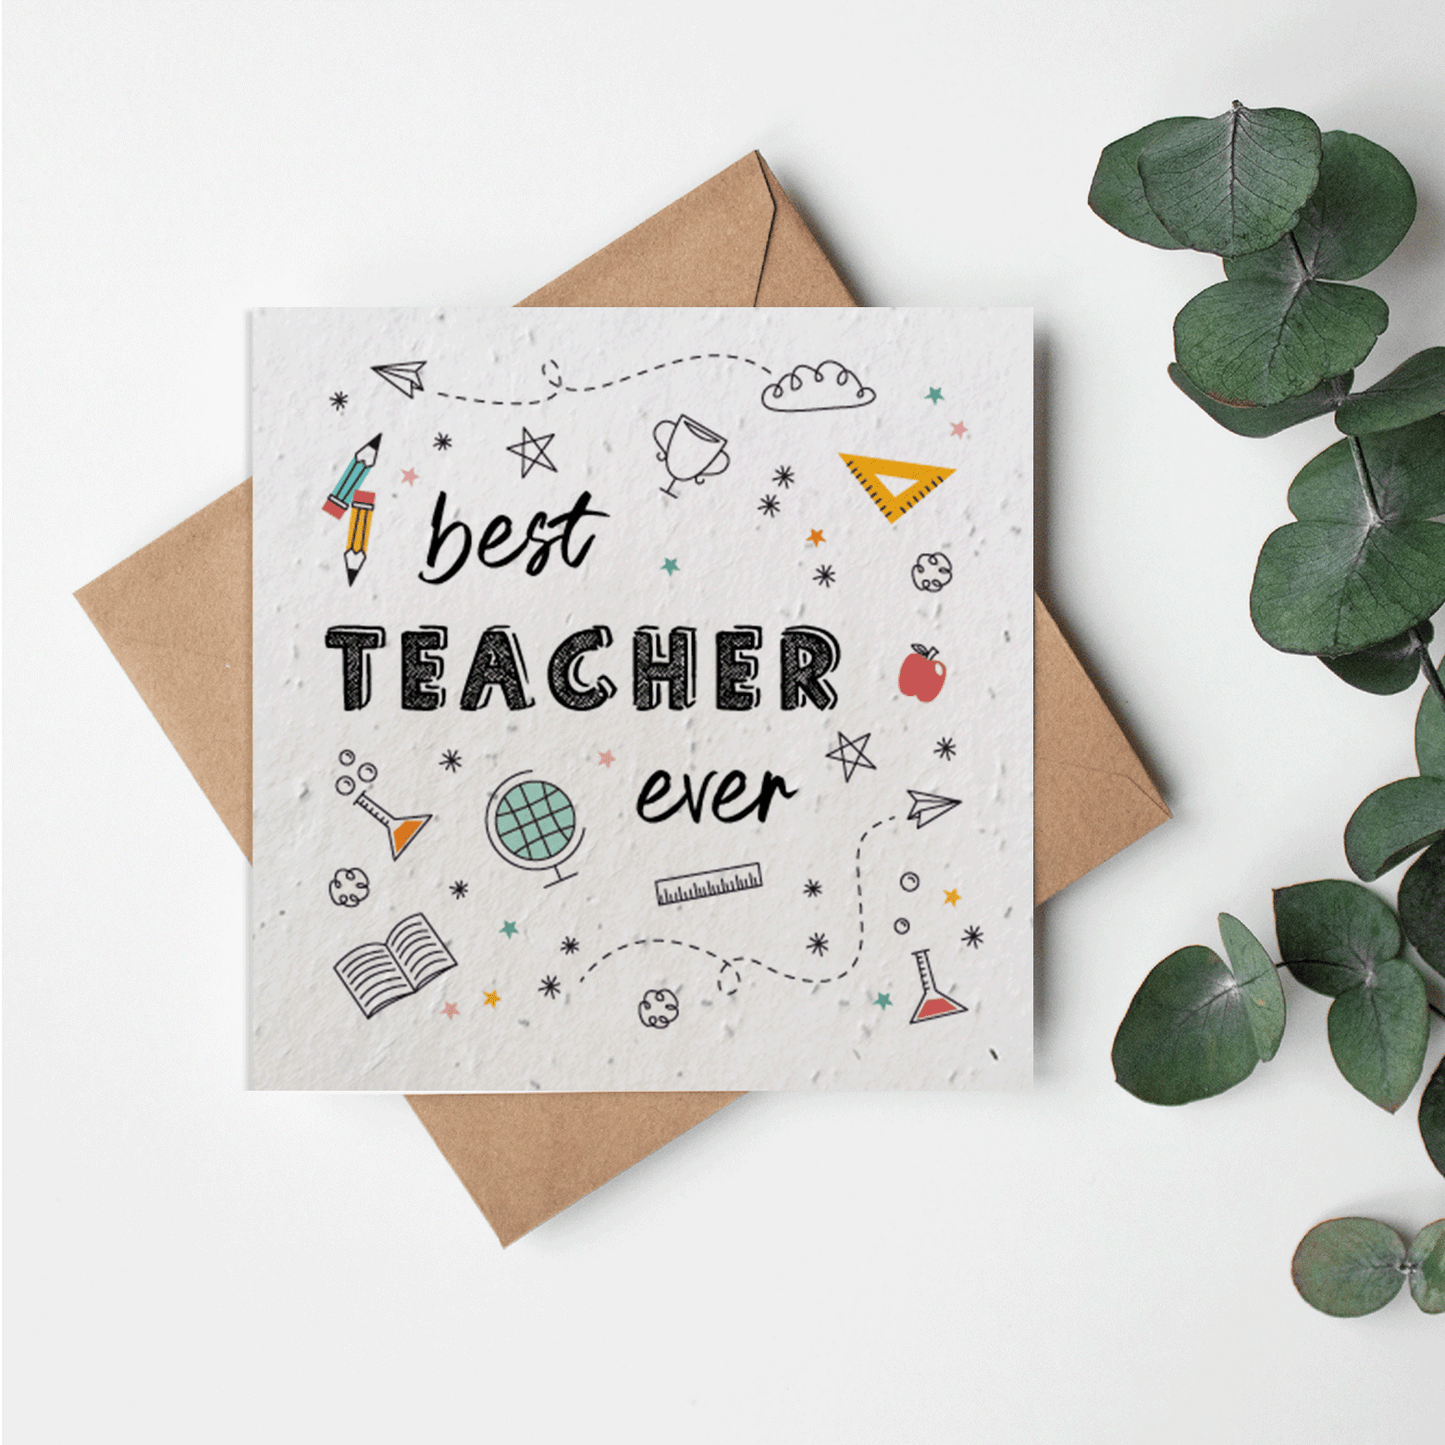 Academics - Sketch - Best teacher